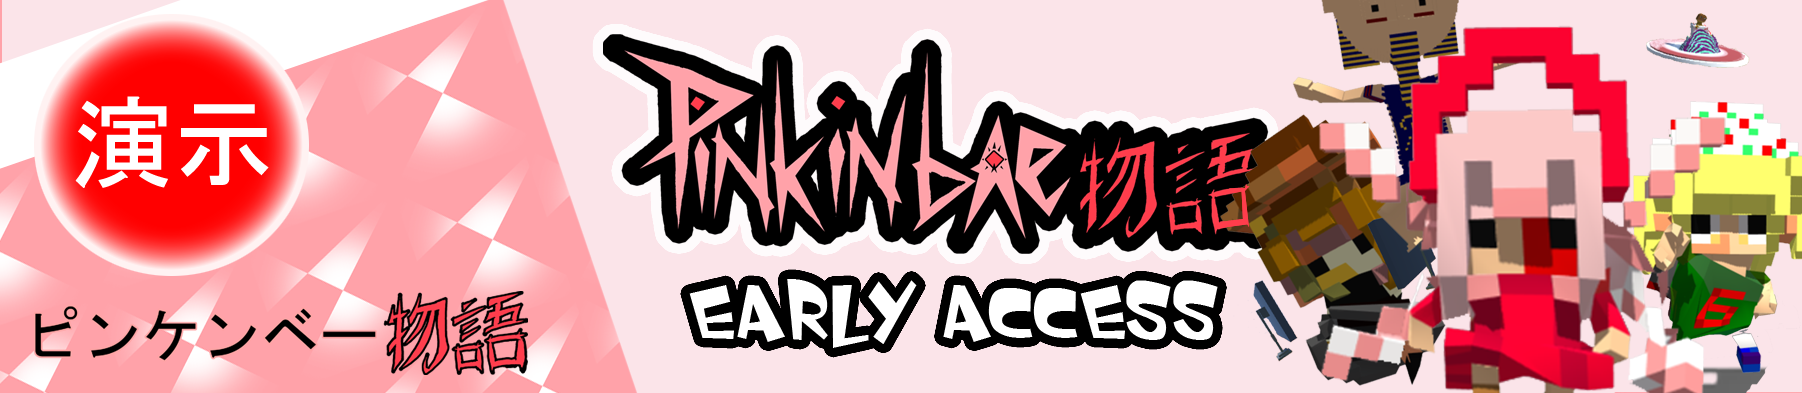 Pinkinbae物語 [Early Access] Web Version